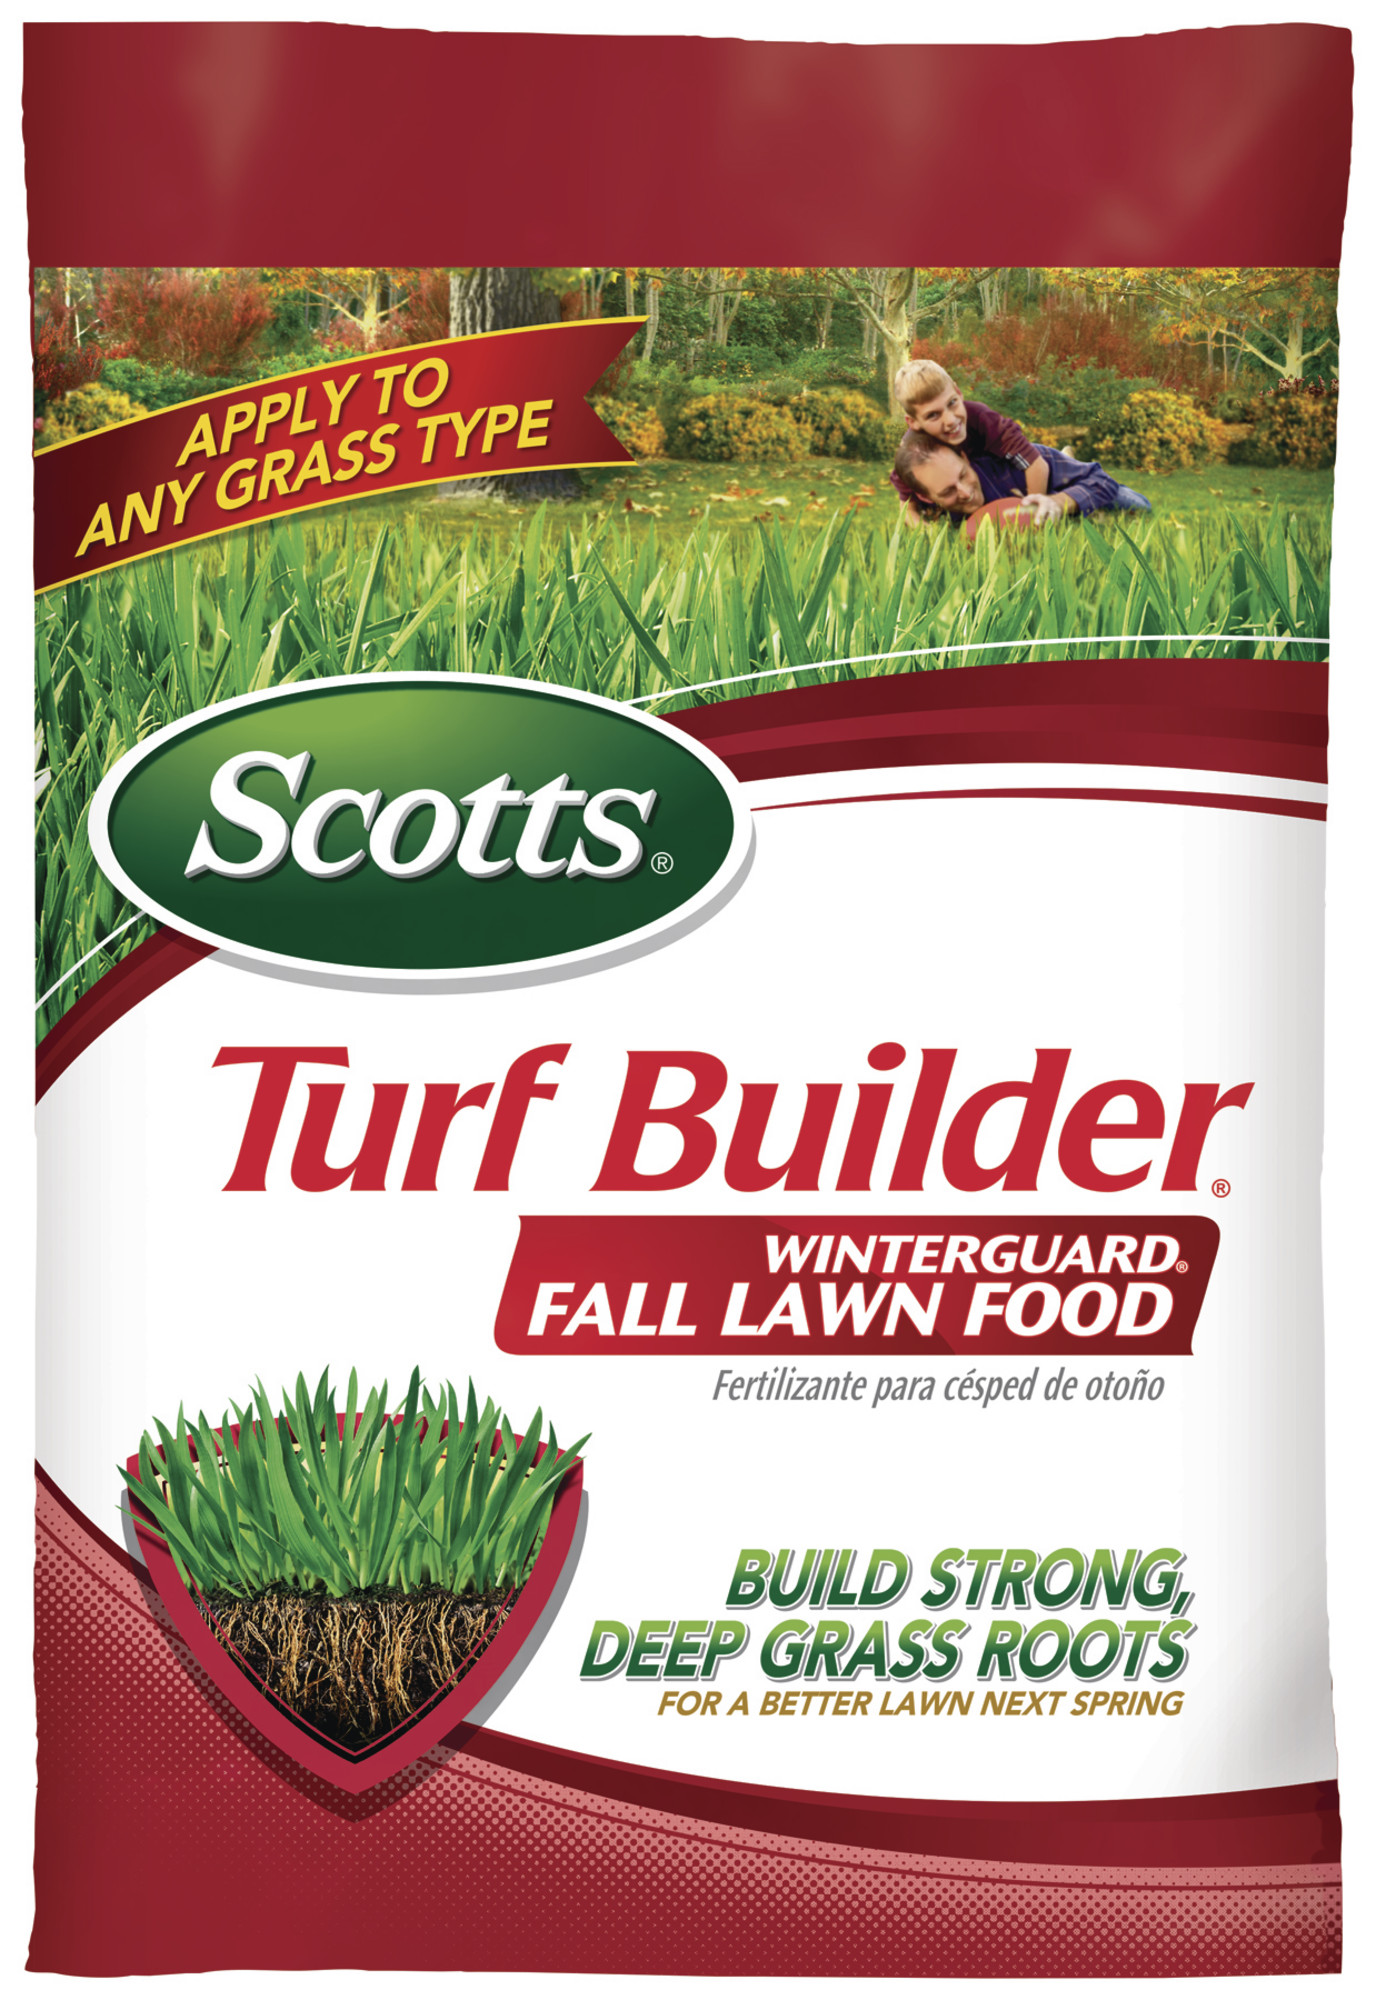 Scotts Turf Builder WinterGuard Fall Lawn Fertilizer, 12.5 lbs. - image 1 of 9